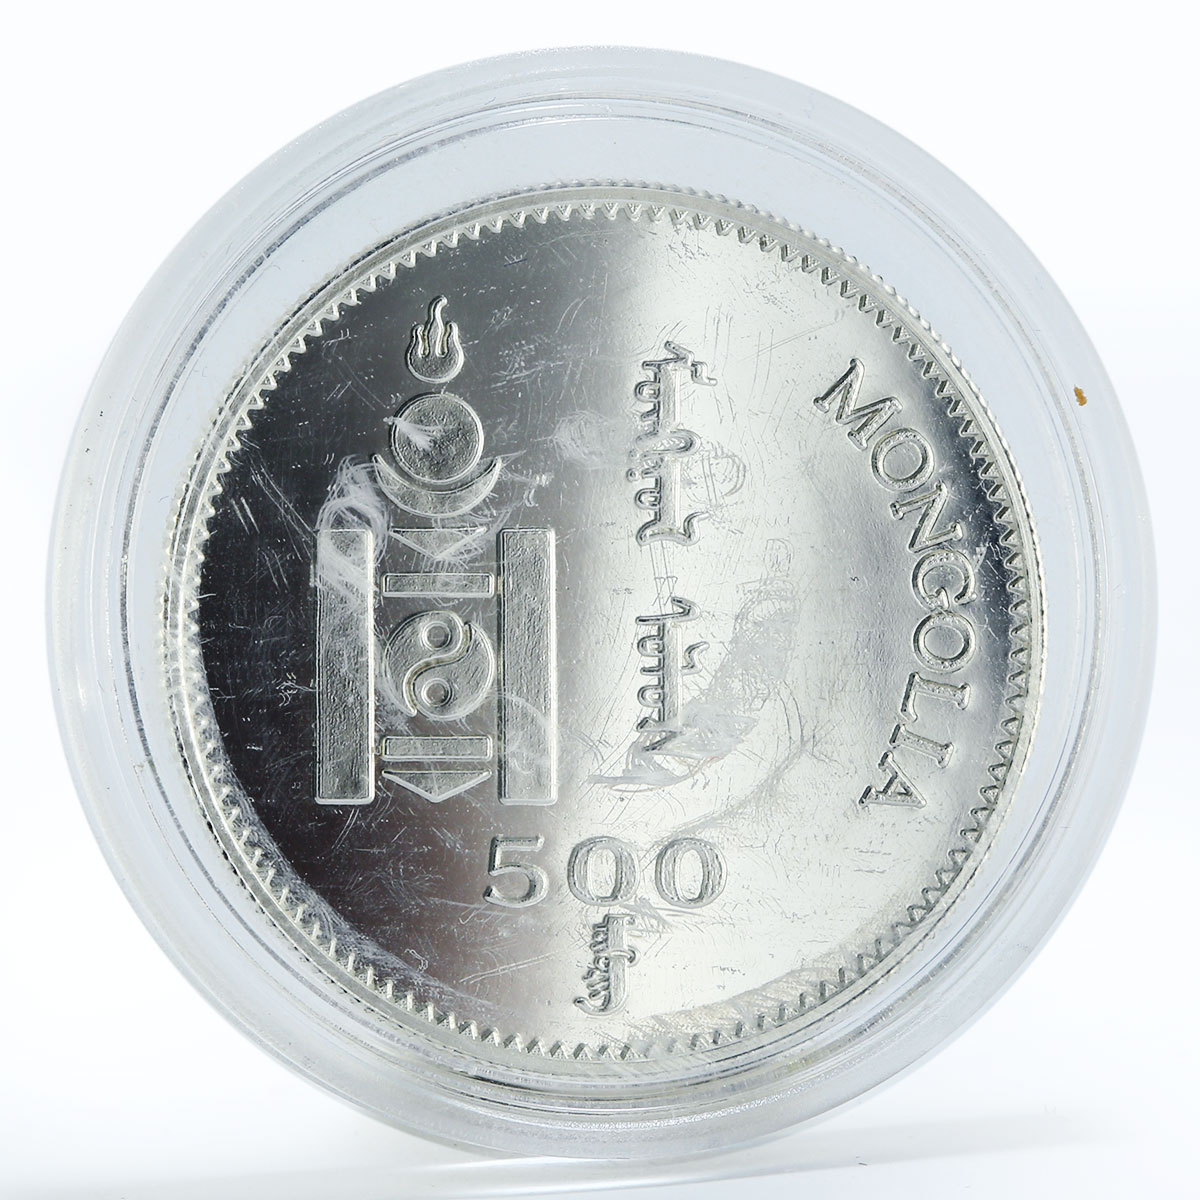 Mongolia 500 togrog Wild Bactrian Carmel proof silver coin 1999